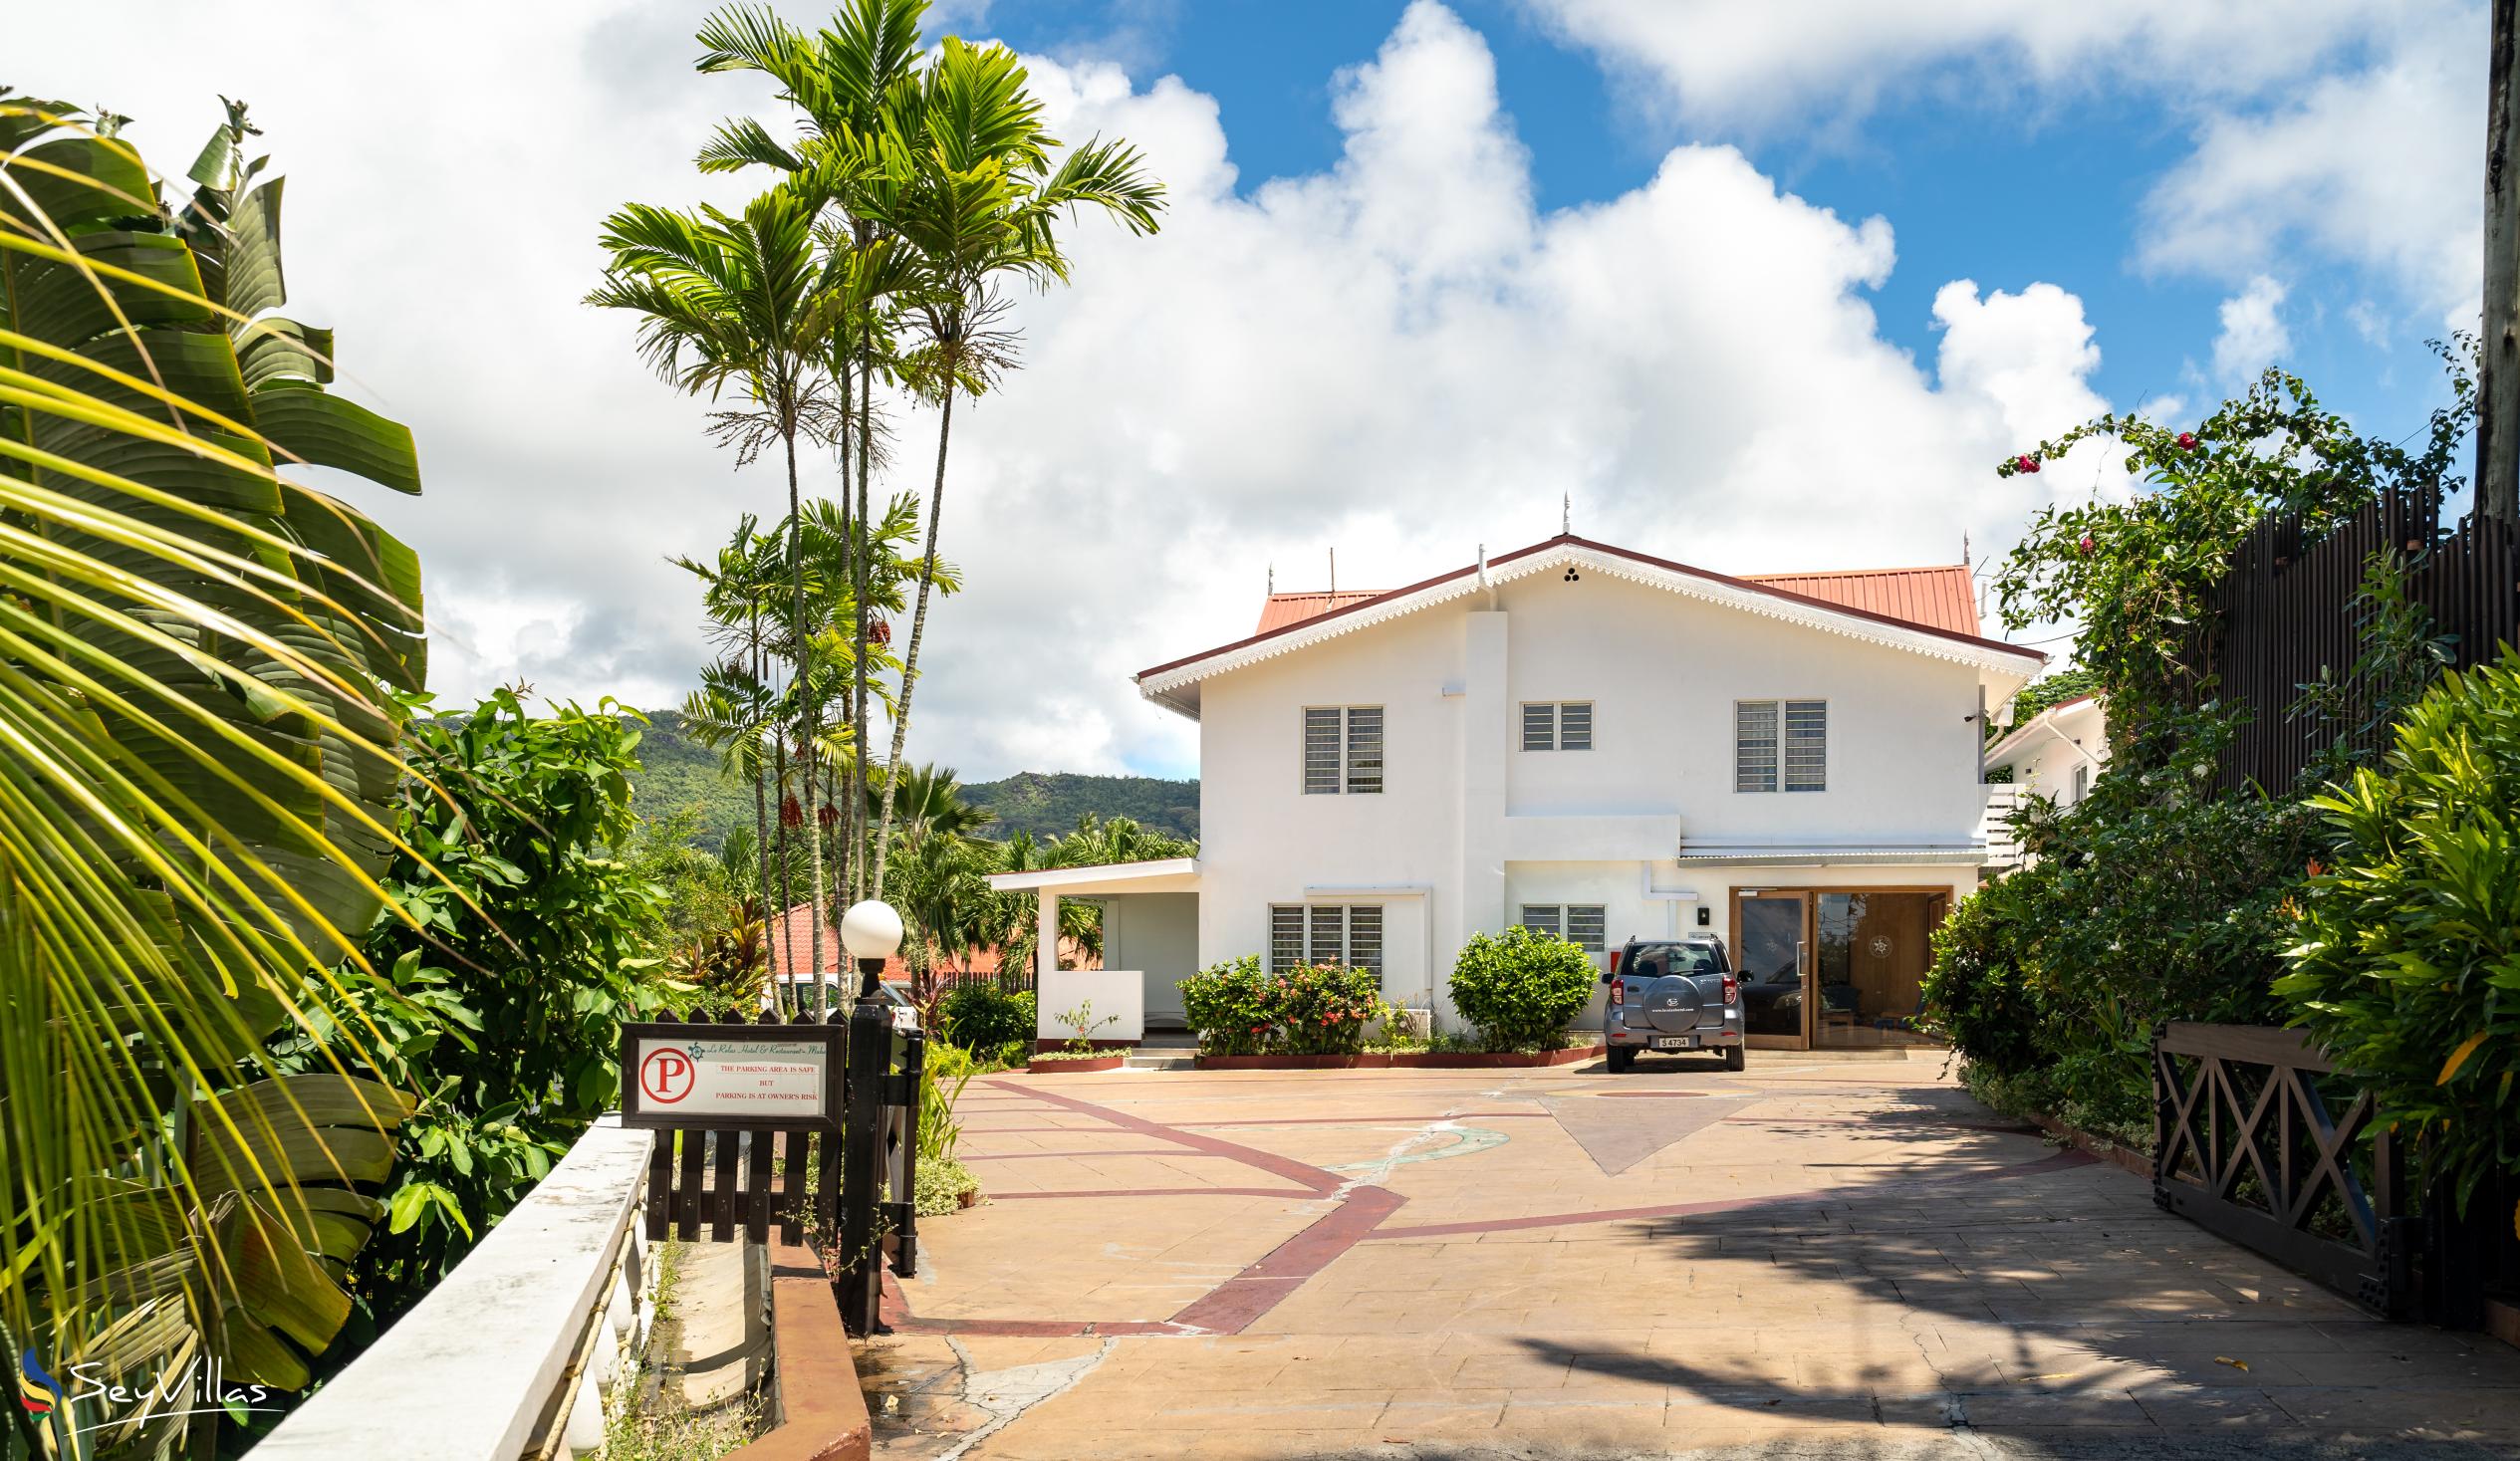 Foto 43: Le Relax Hotel & Restaurant - Aussenbereich - Mahé (Seychellen)